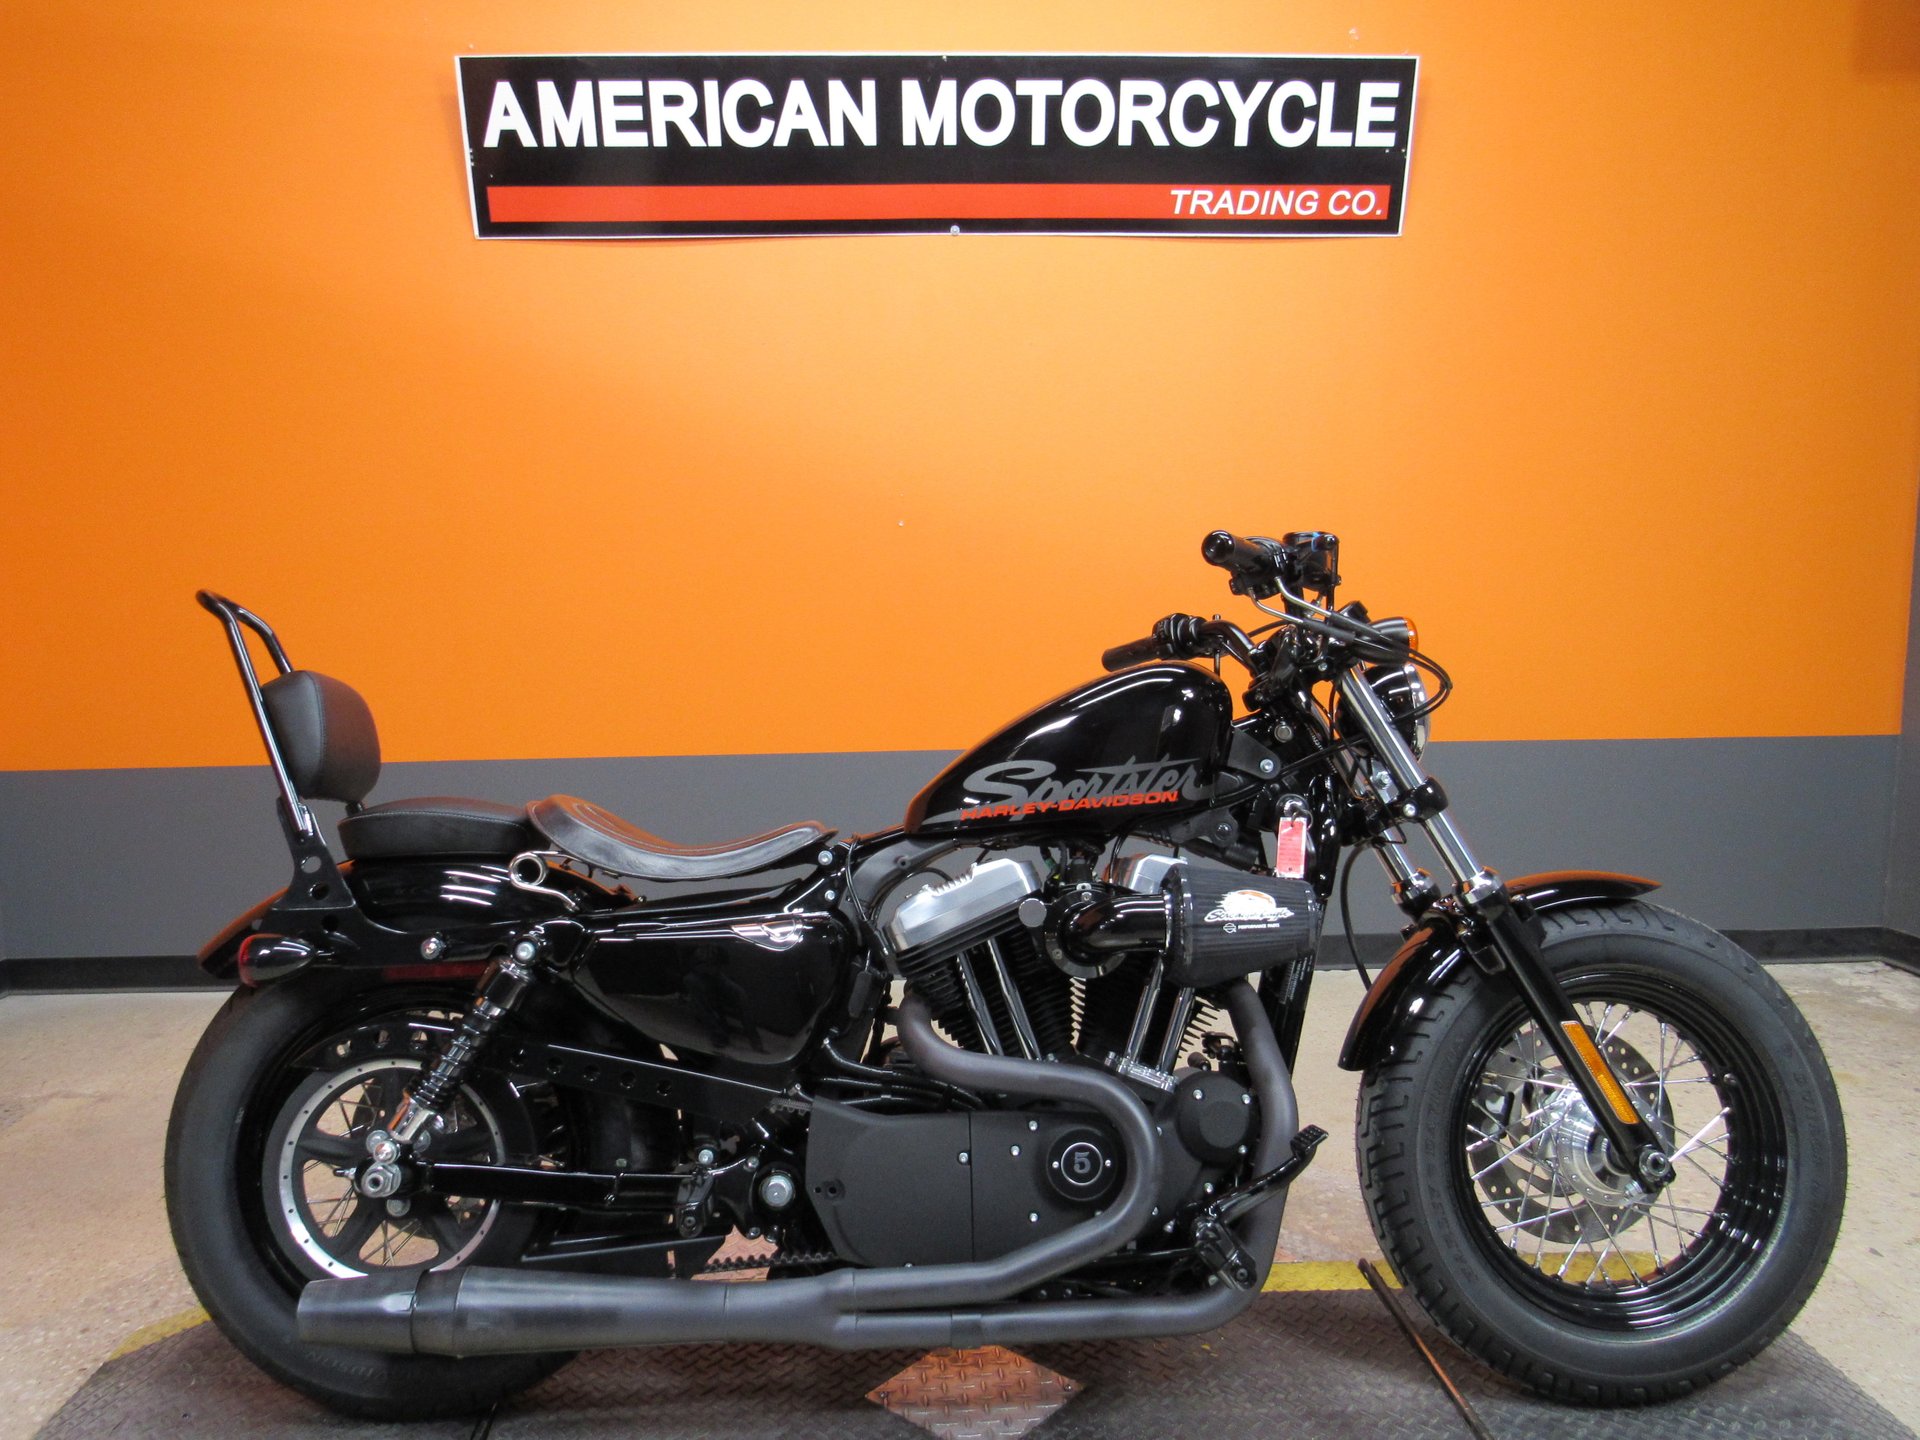 2011 Harley-Davidson Sportster 1200 | American Motorcycle Trading Company -  Used Harley Davidson Motorcycles